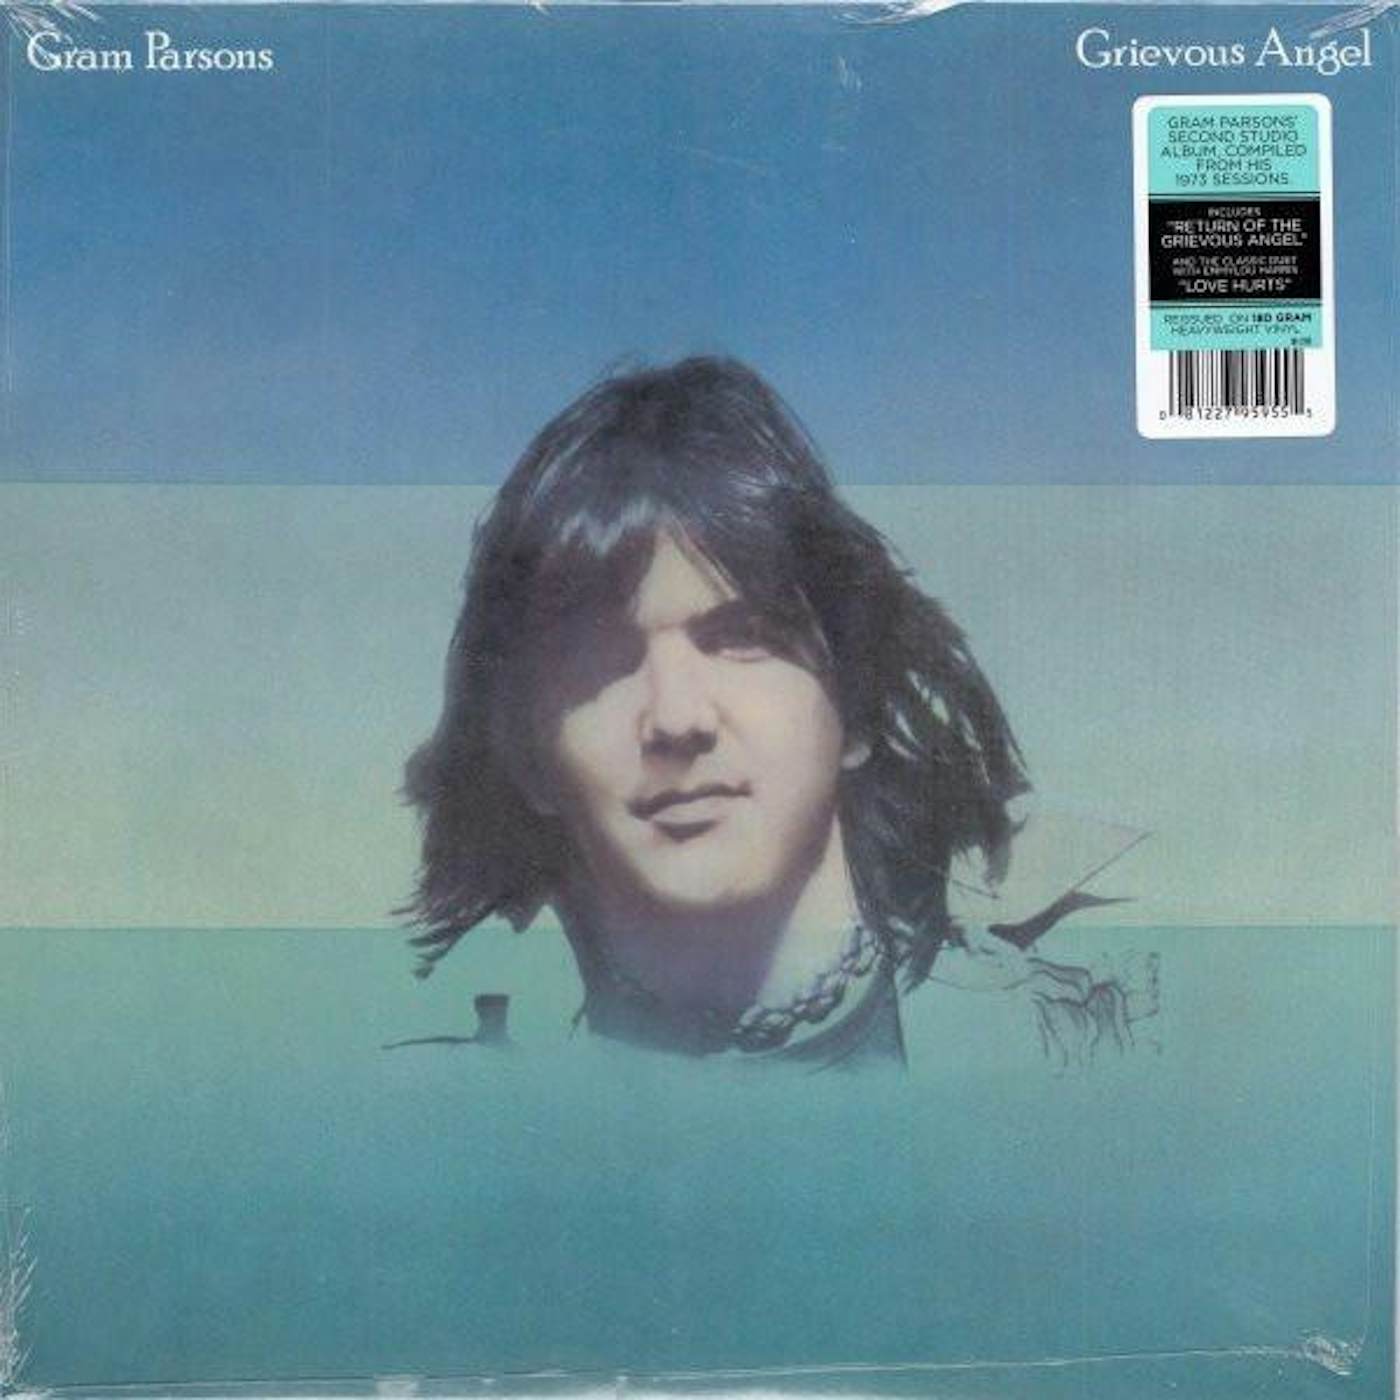 Gram Parsons GREVIOUS ANGEL Vinyl Record